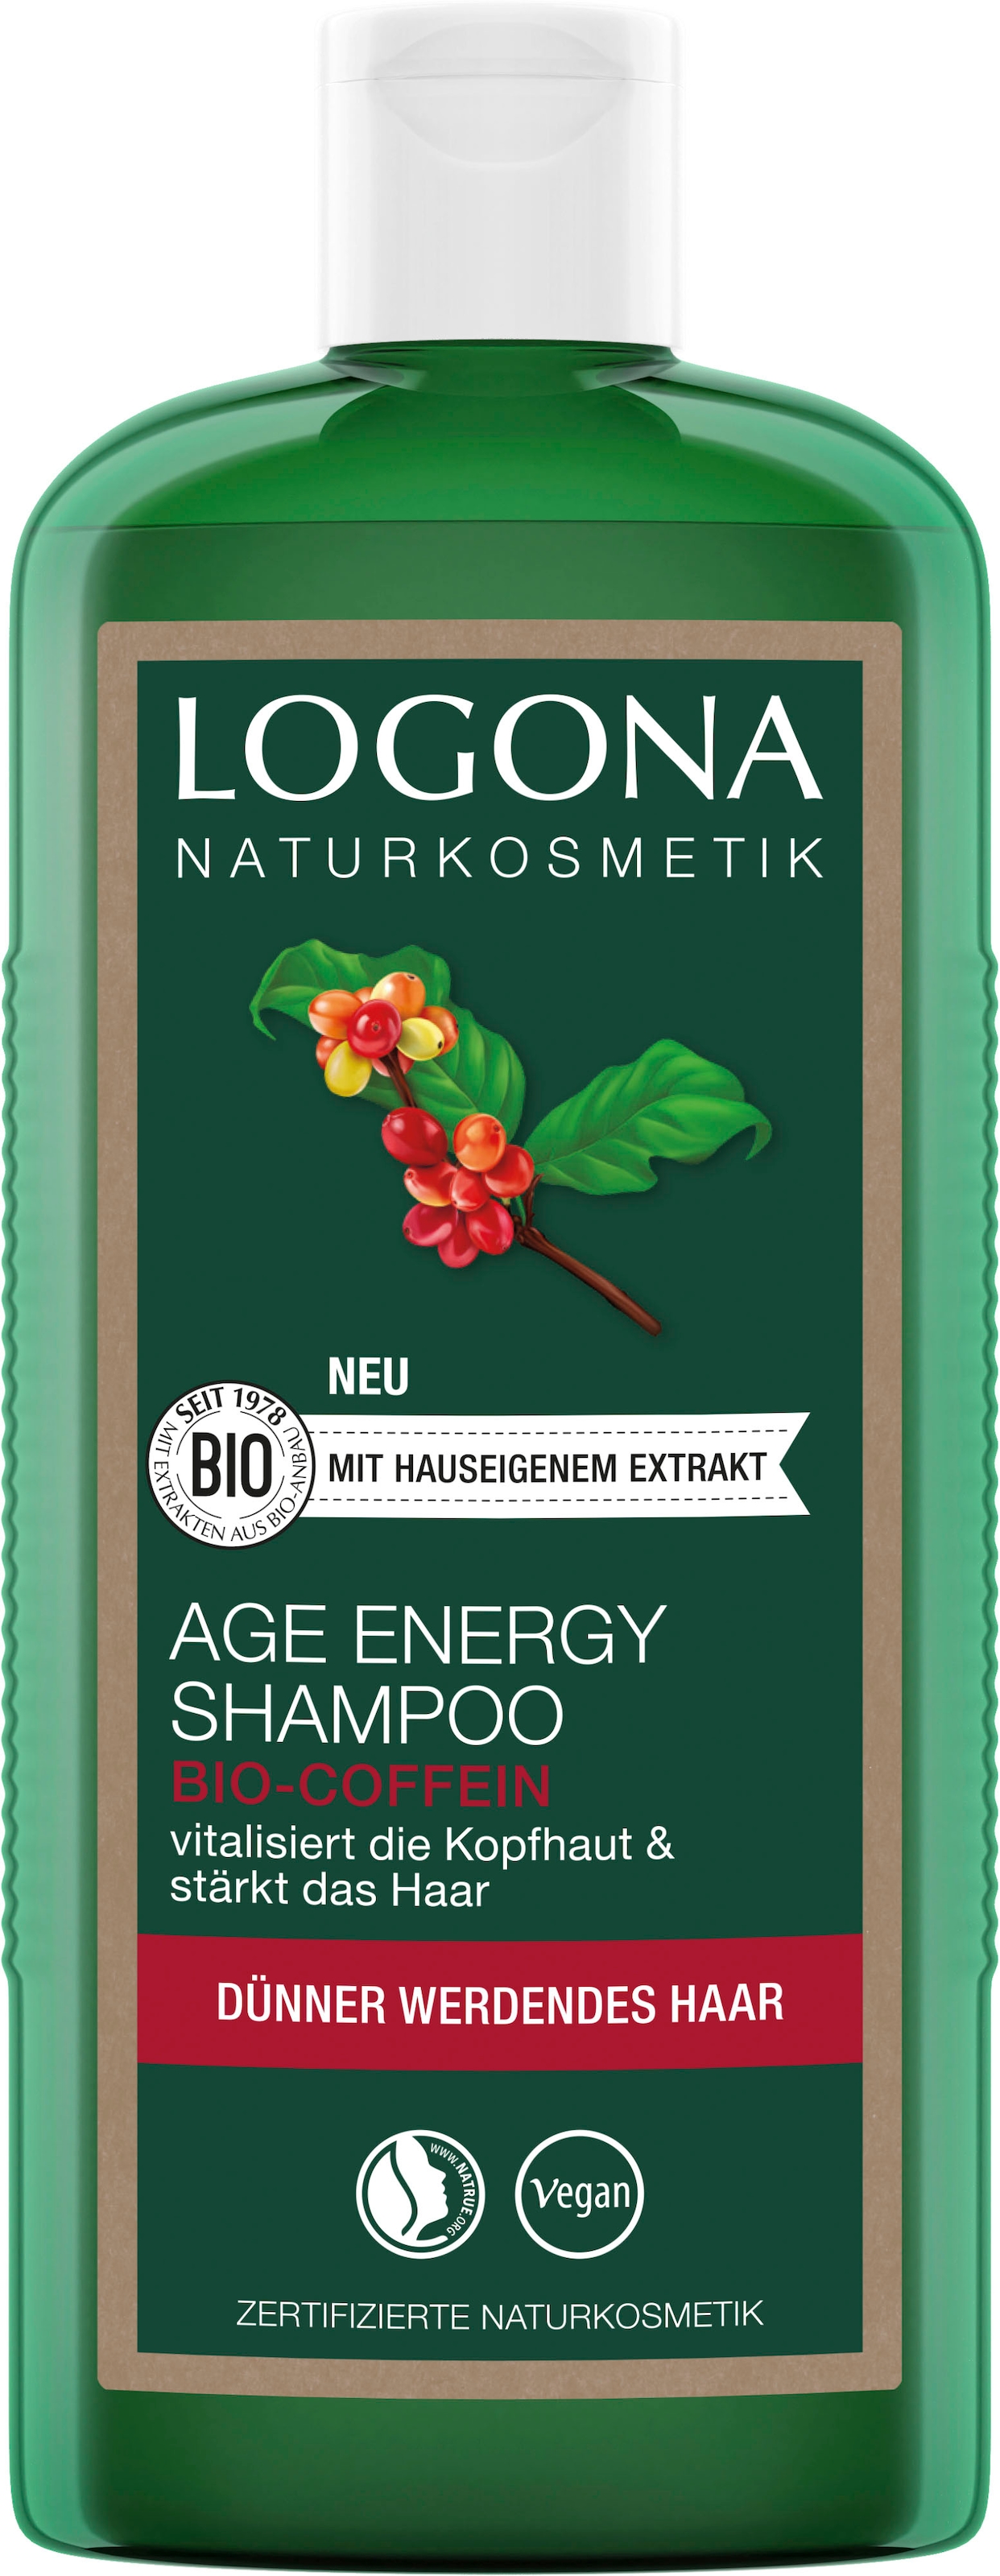 Beliebte Artikel in diesem Monat LOGONA Haarshampoo Energy bei »Logona Age Bio-Coffein« OTTOversand Shampoo